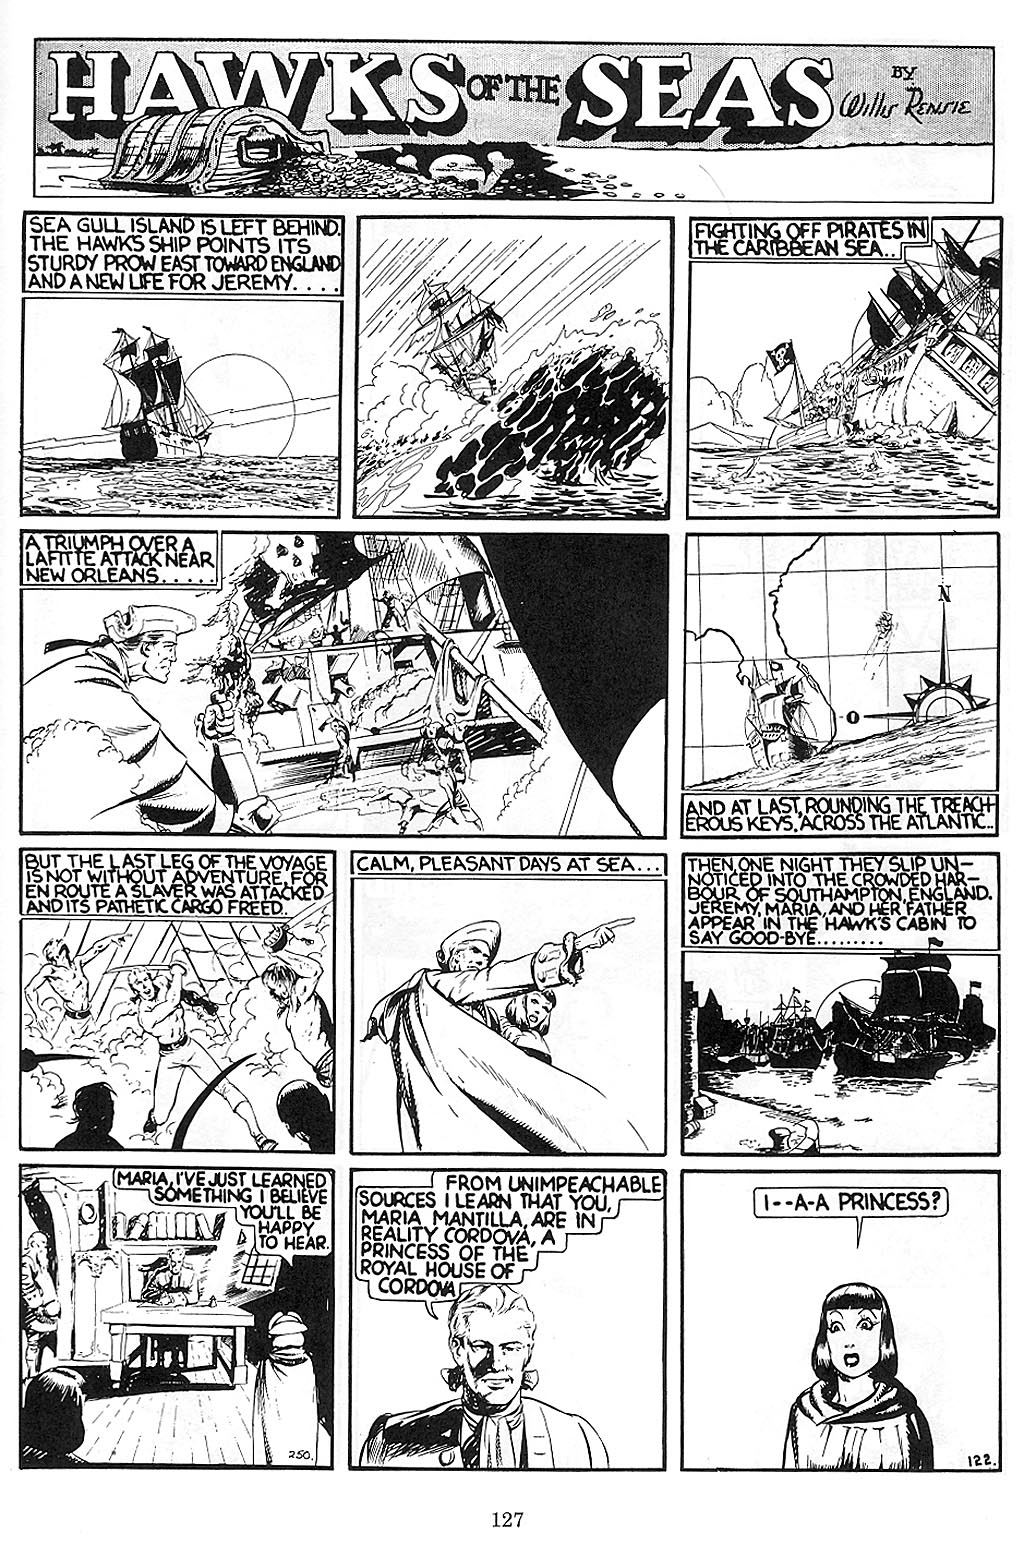 Read online Will Eisner's Hawks of the Seas comic -  Issue # TPB - 128